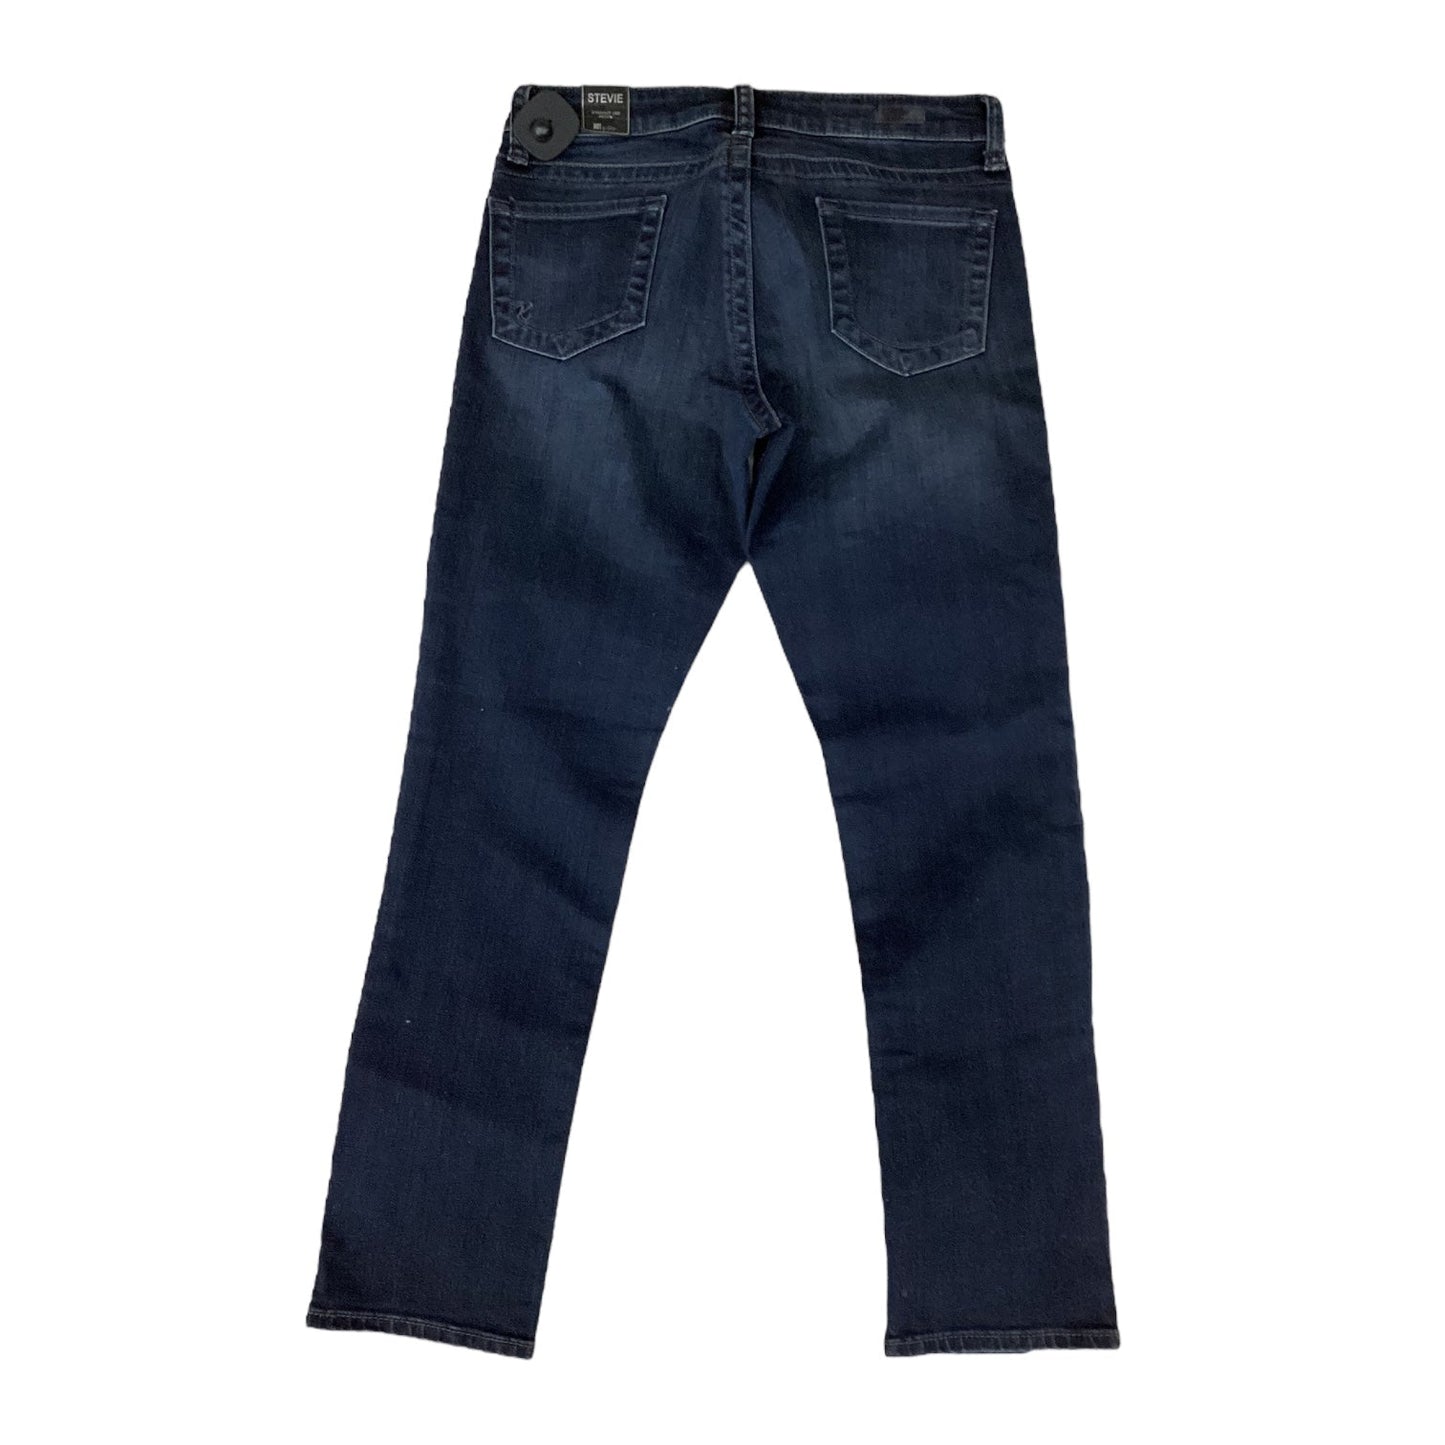 Blue Denim Jeans Designer Kut, Size 4petite